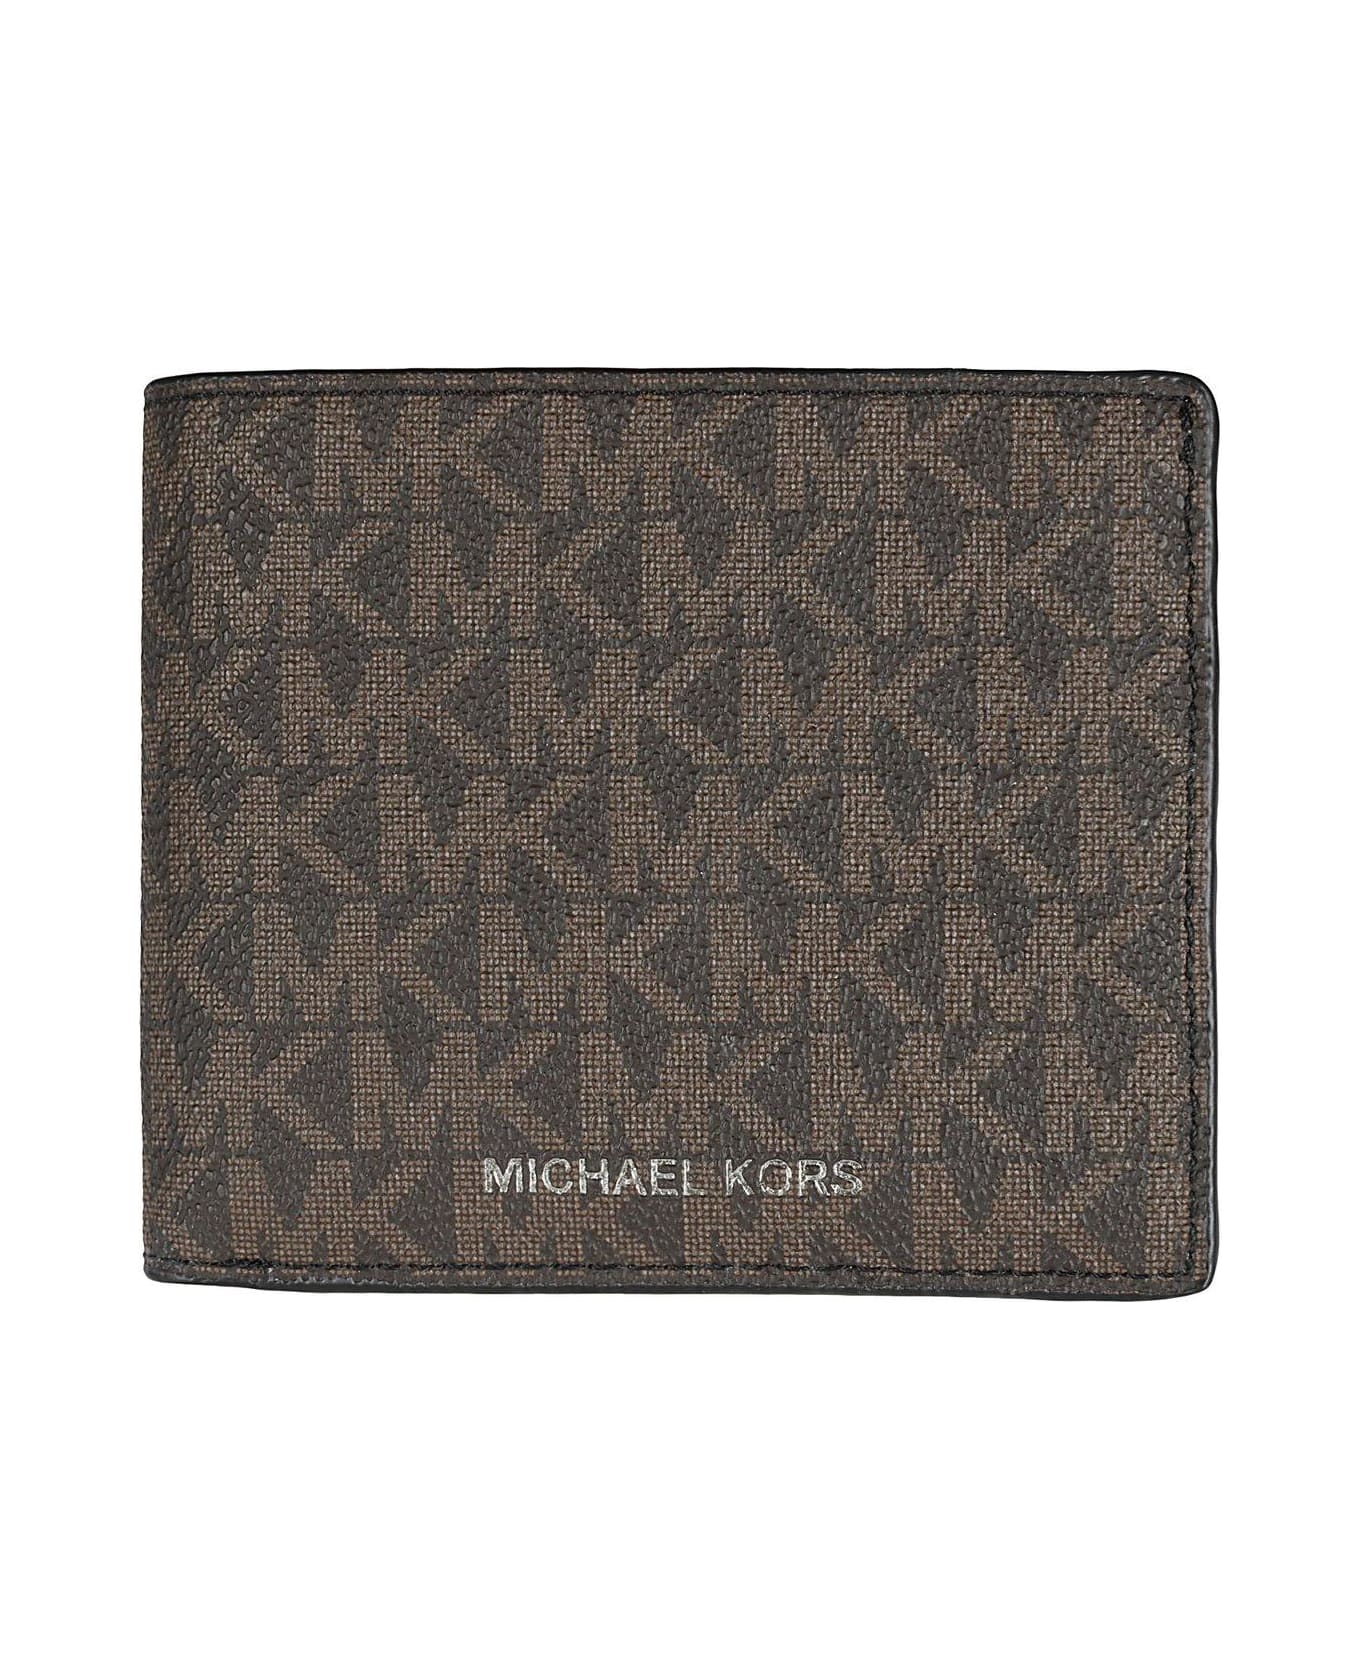 Michael Kors Monogram Bi-fold Wallet - Brn Blk